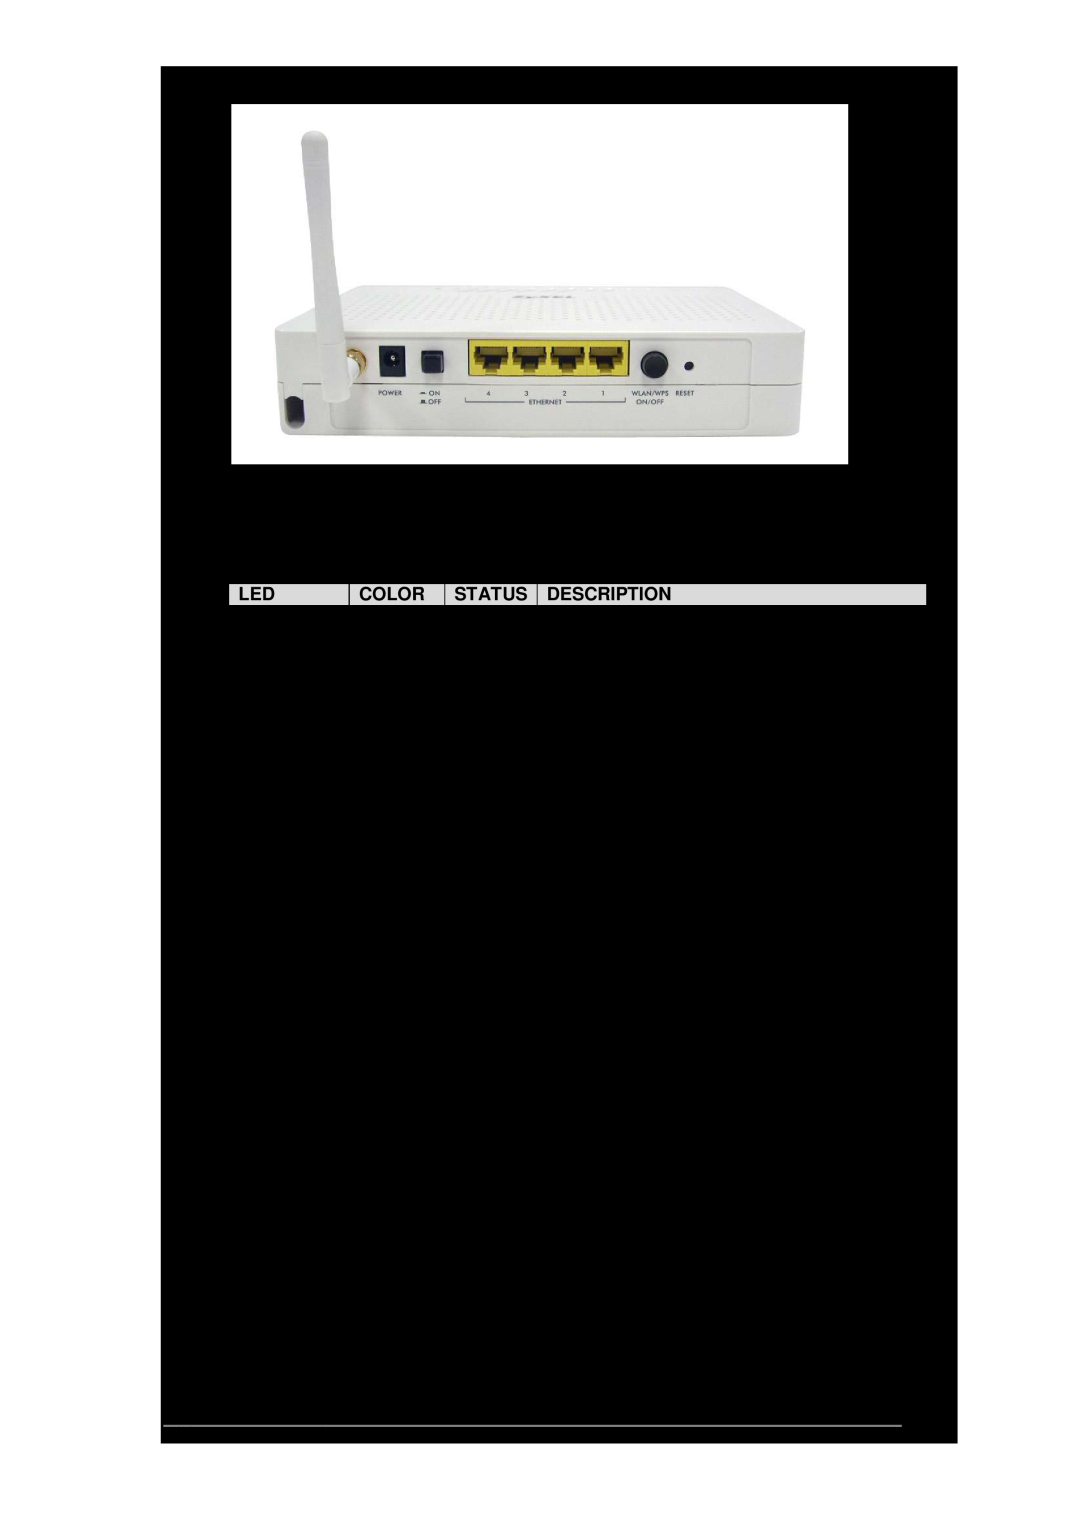 ZyXEL Communications wireless active fiber router manual Front Panel LEDs and WPS Button, Color, Status, Description, Power 